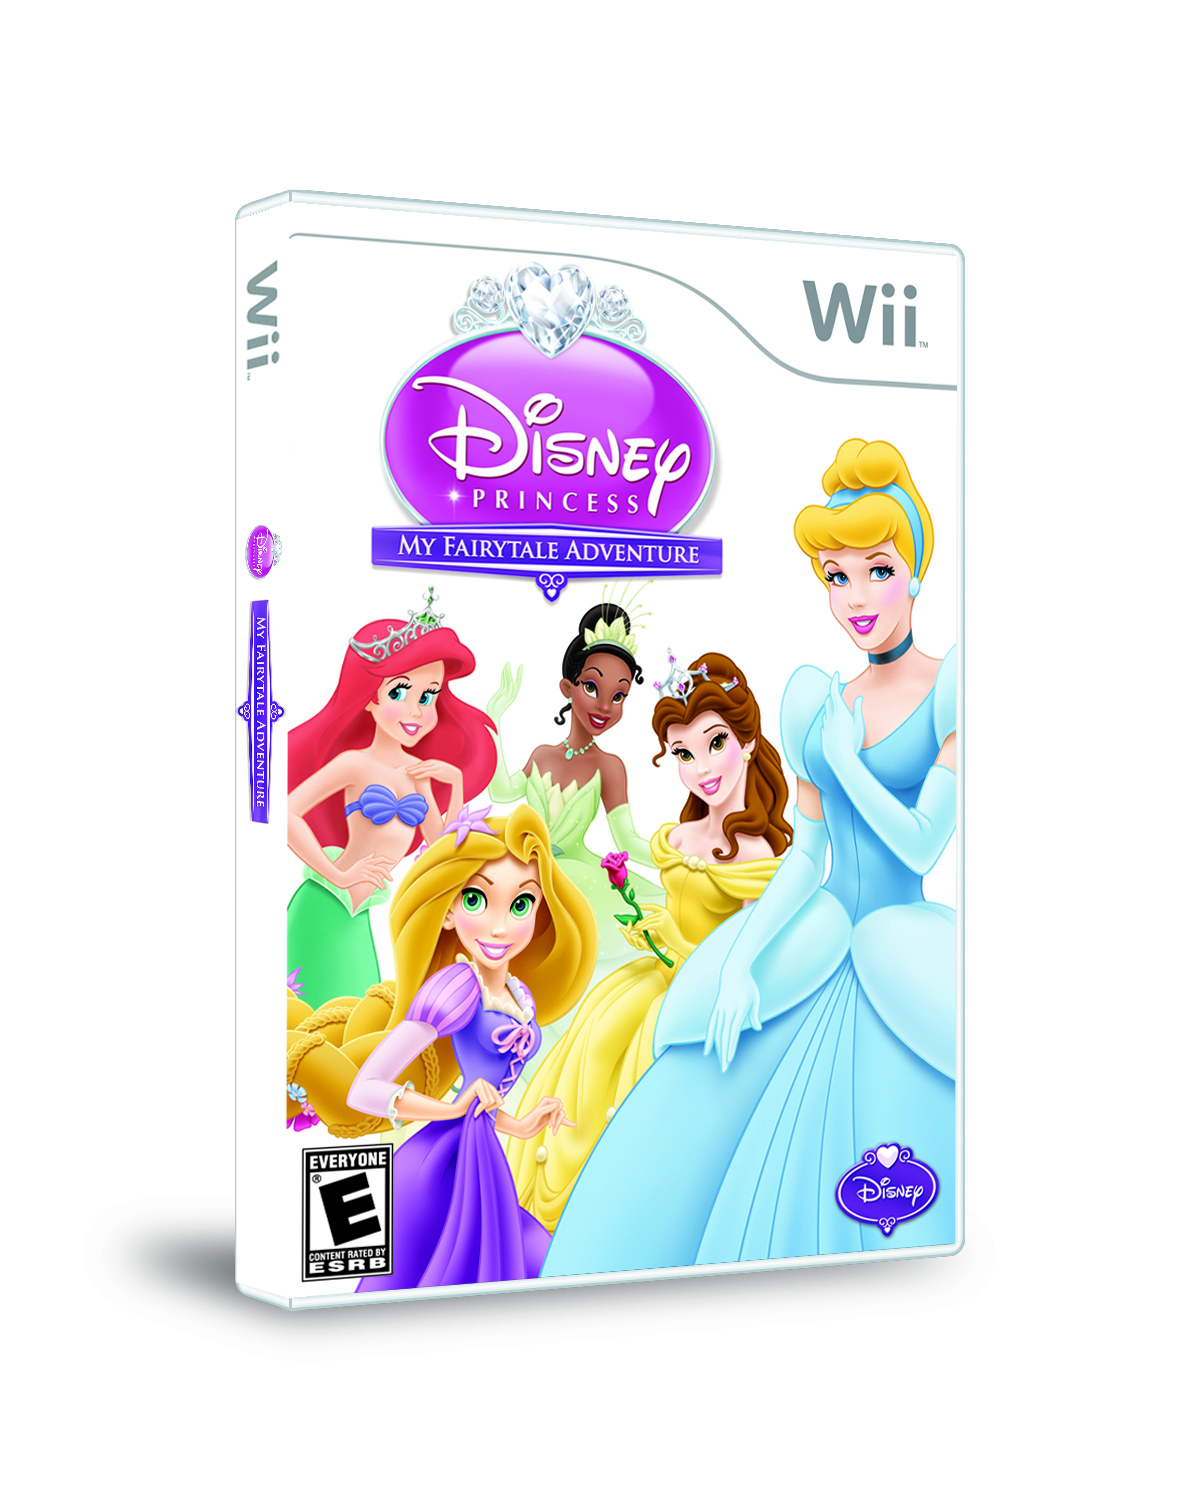 Disney princess video games